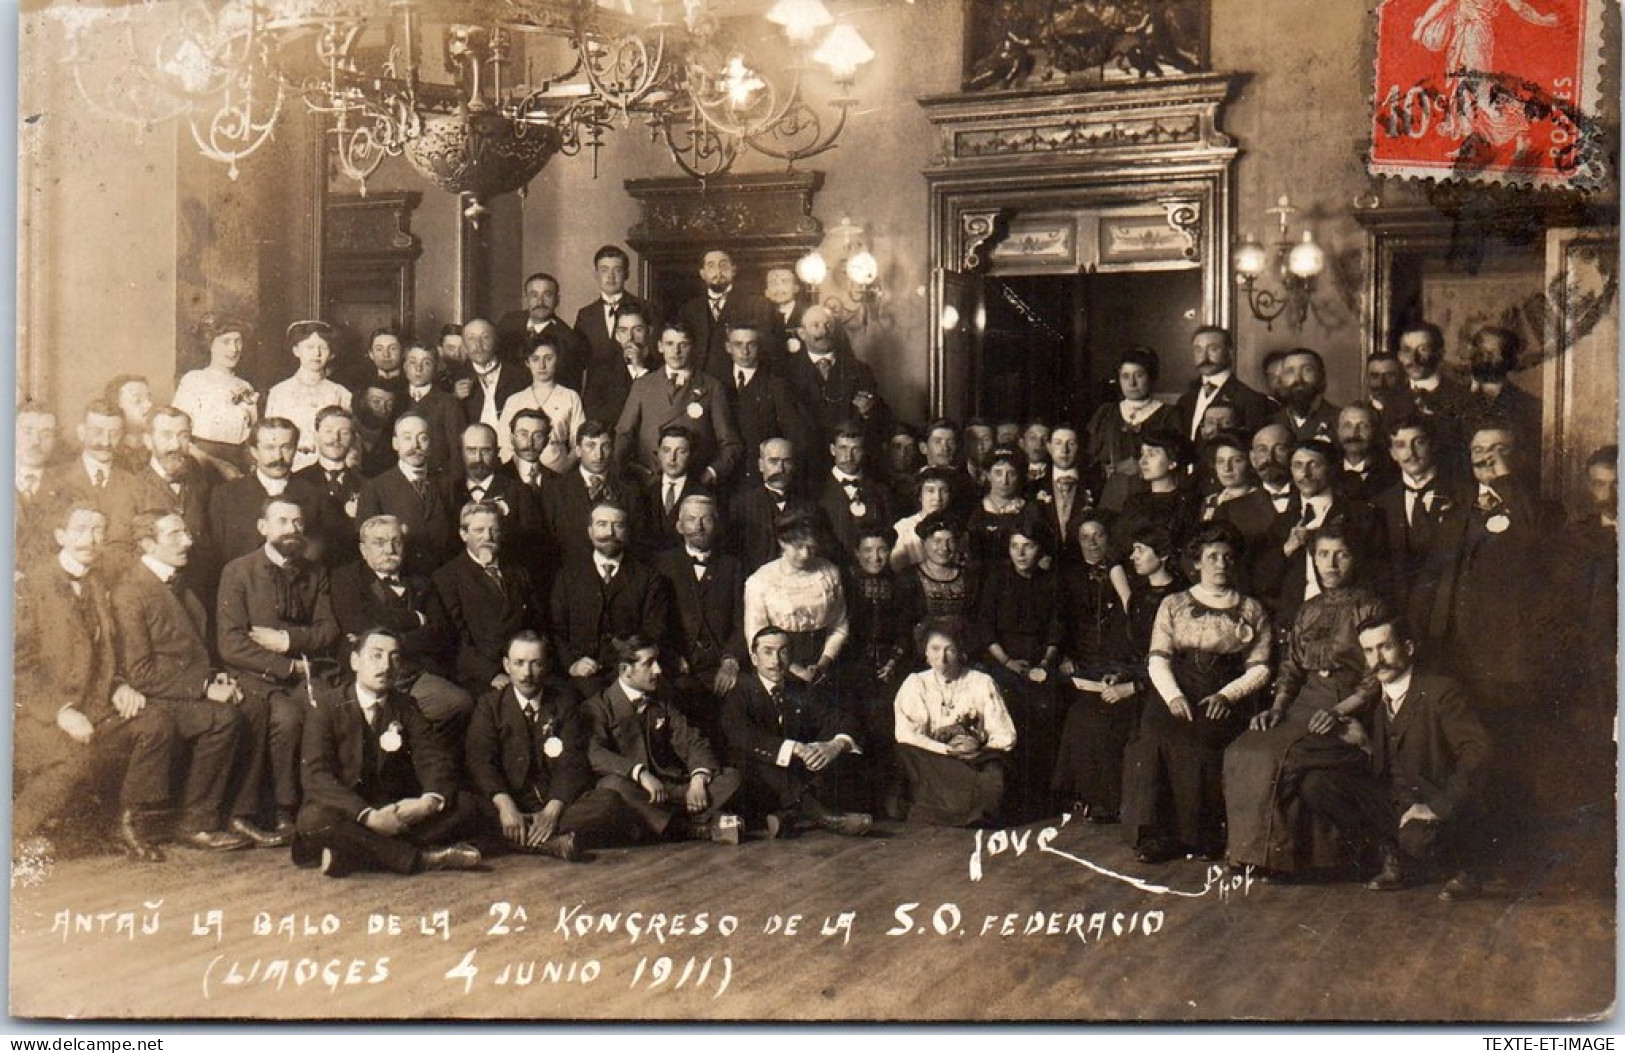 87 LIMOGES - CARTE PHOTO - Congres De La S.O Federacio 4 Juin 1911 - Limoges